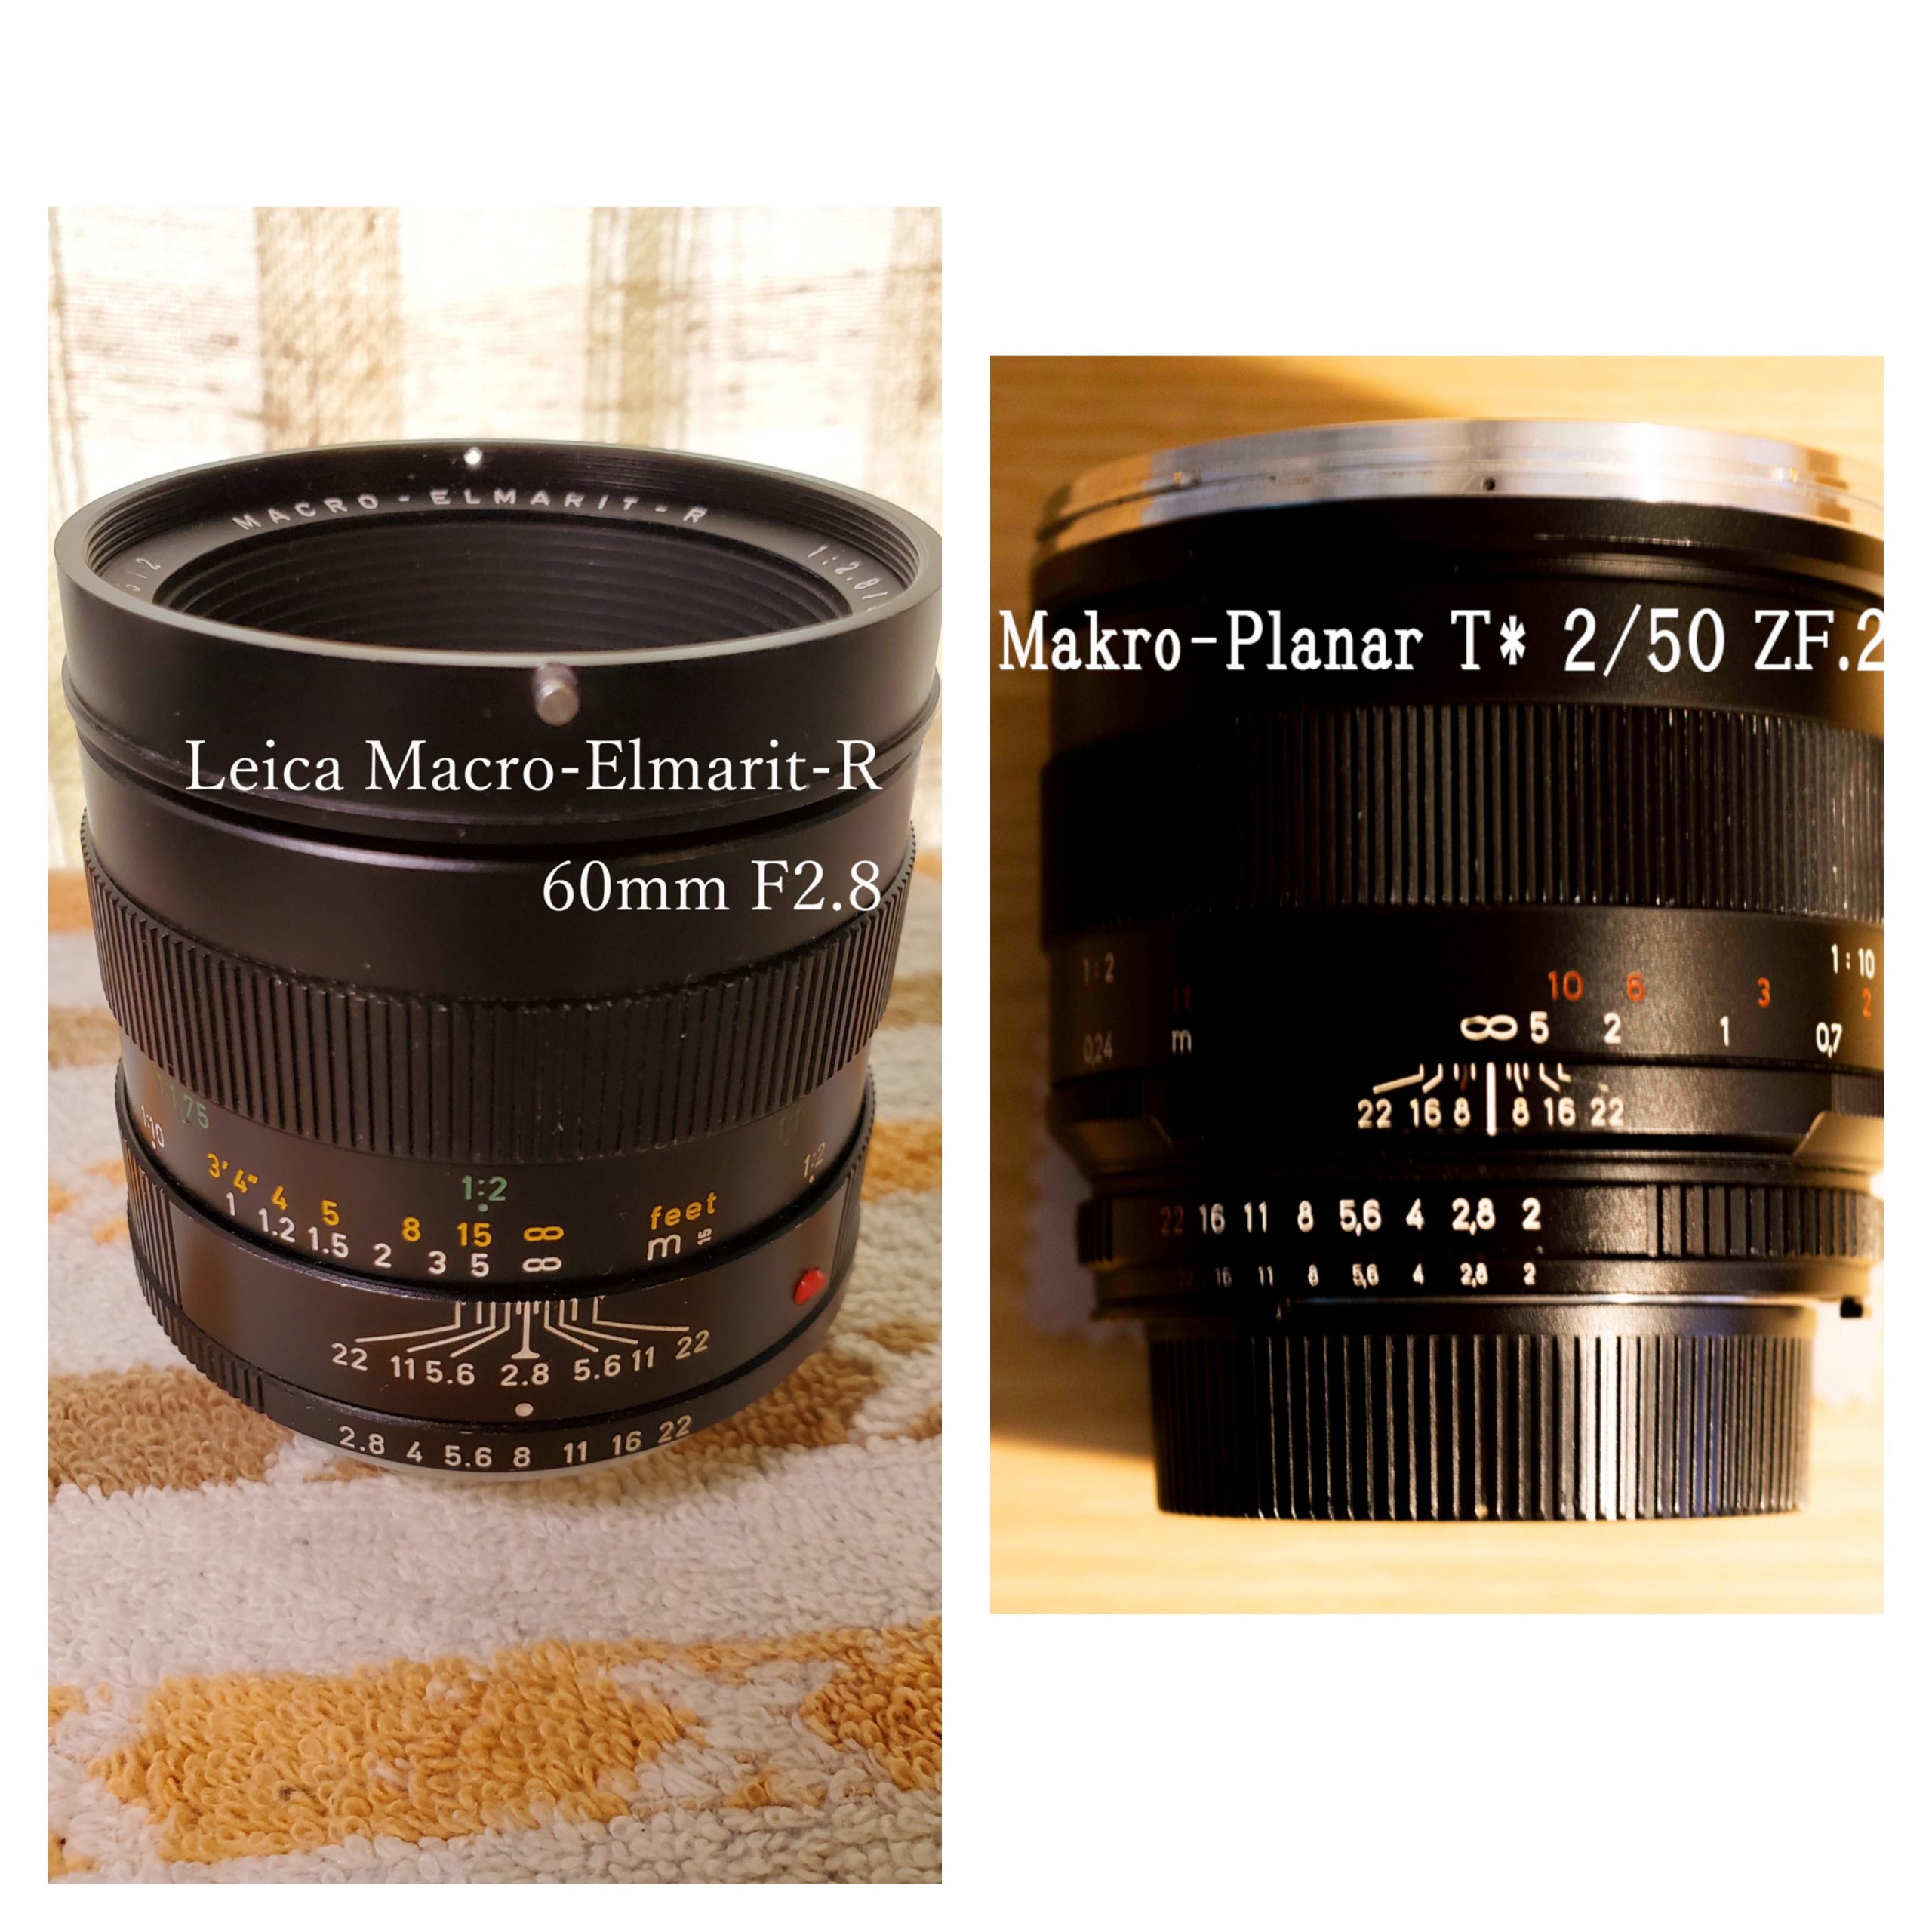 Leica Macro-Elmarit-R 60mm F2.8 の実力をマクロプラナーと比較する 